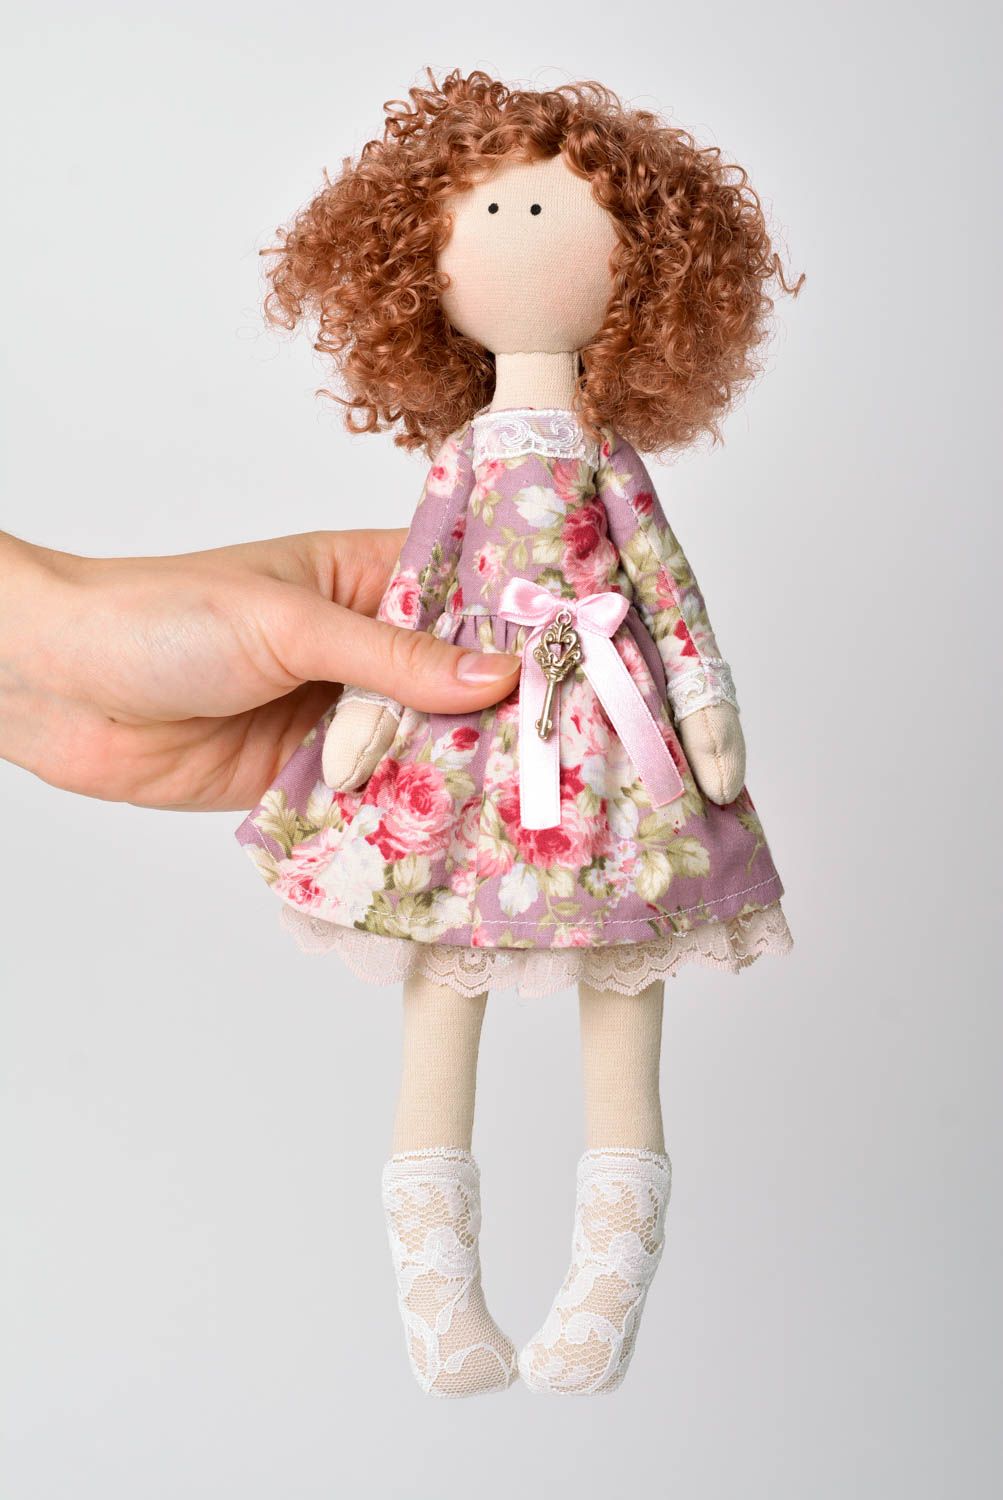 Unusual doll designer toy interior decor ideas gift for children fabric toy photo 2